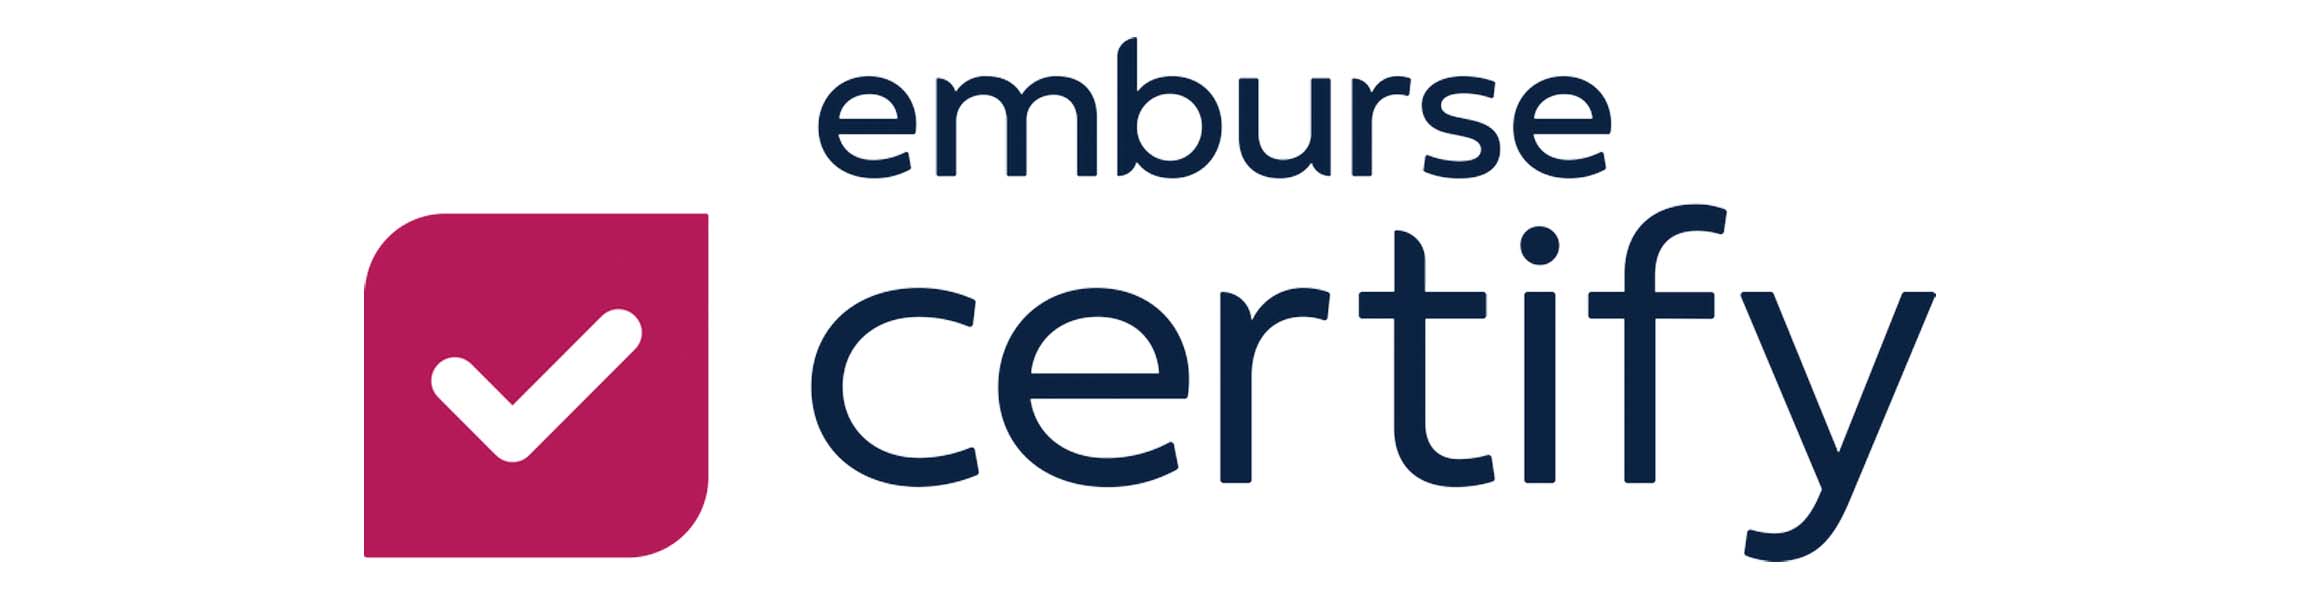 emburse-certify